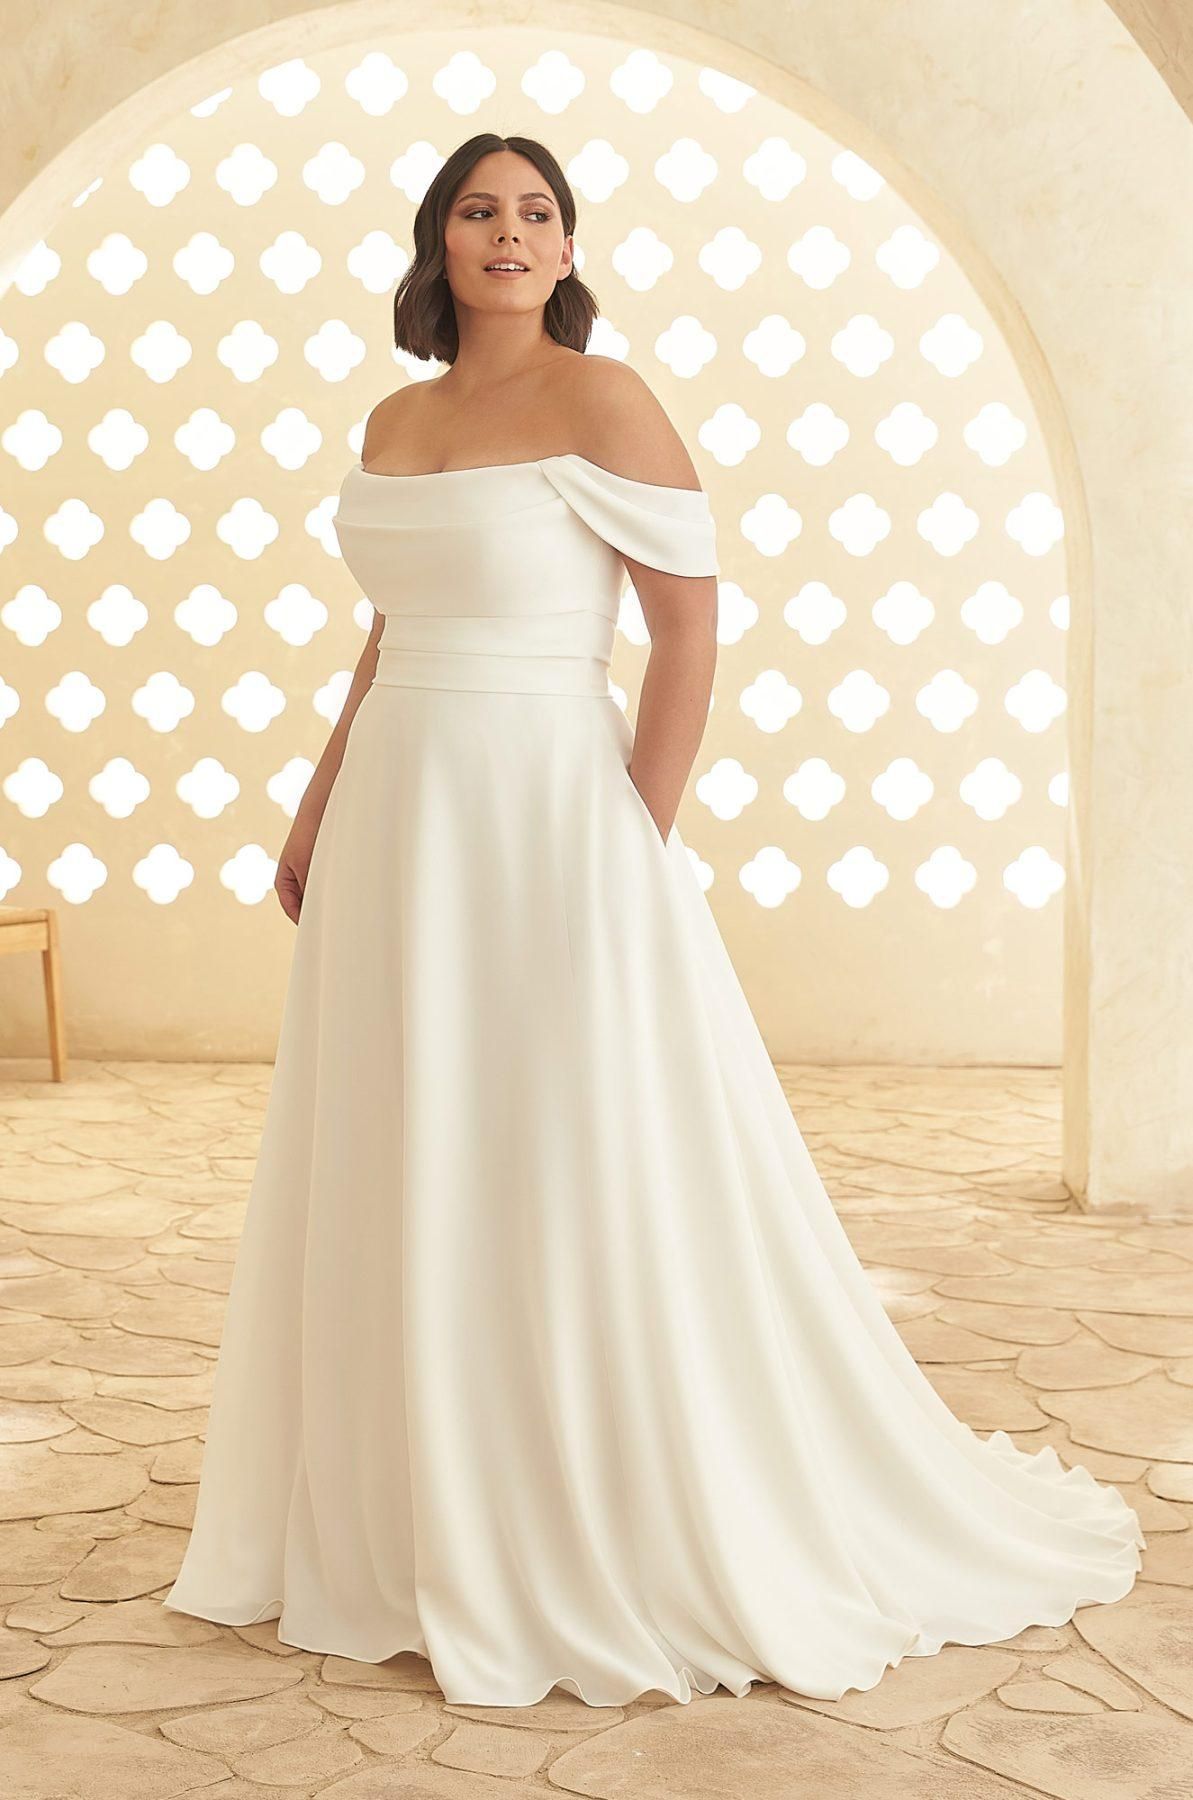 Sleeved Wedding Dress For Plus Size Ladies | Full Figured Wedding Dresses -  June Bridals